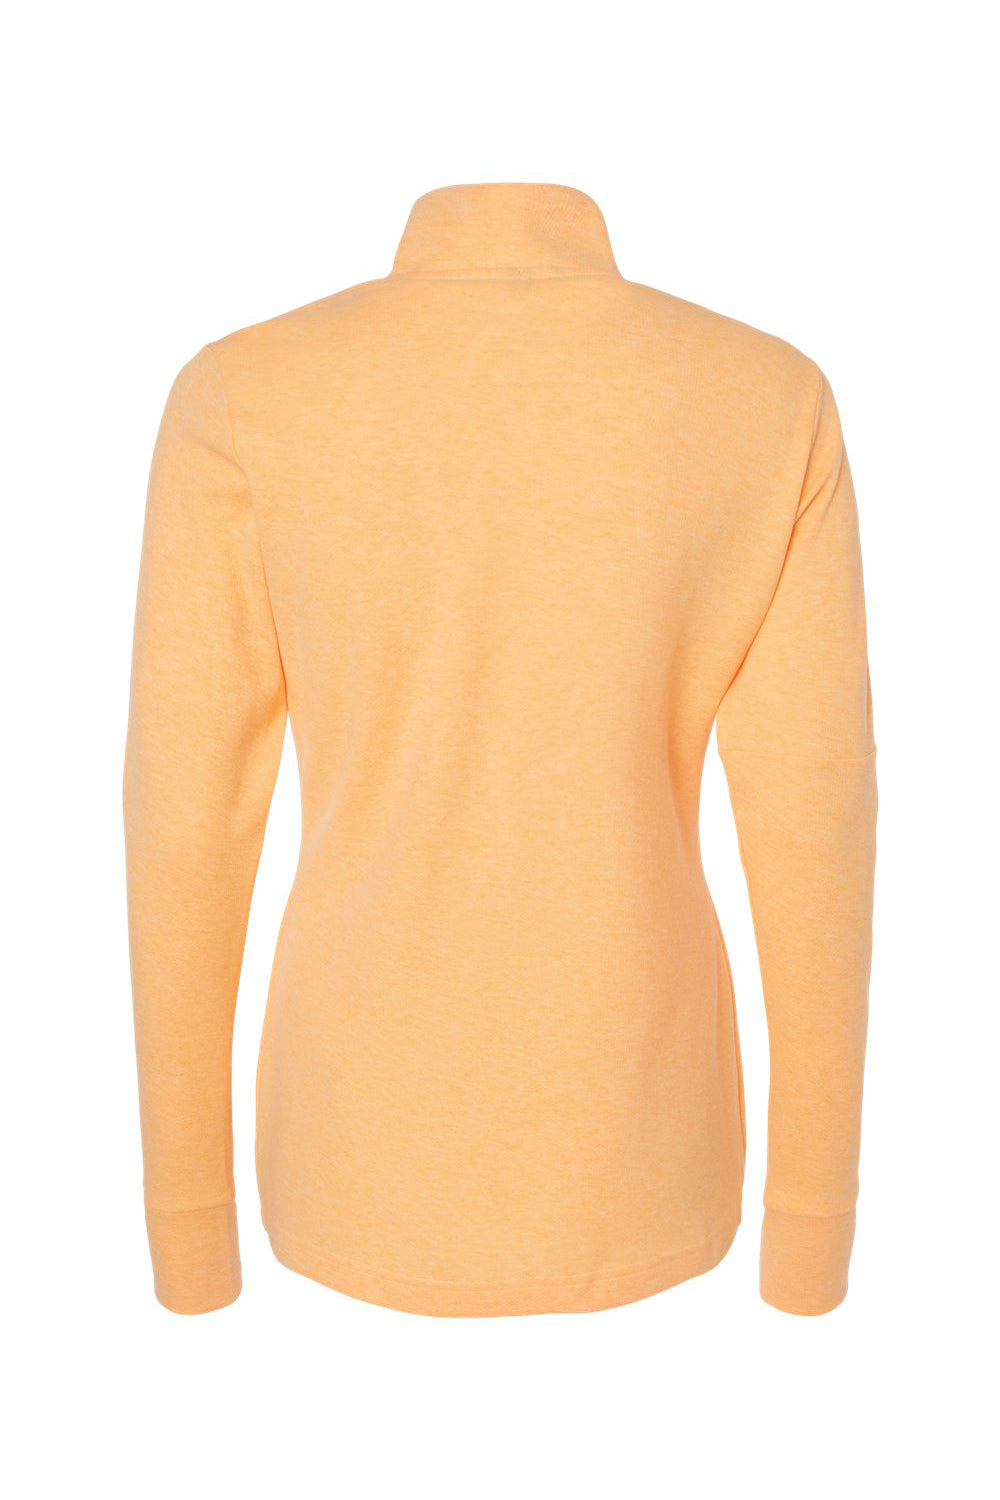 Adidas A555 Womens 3 Stripes 1/4 Zip Sweater Acid Orange Melange Flat Back